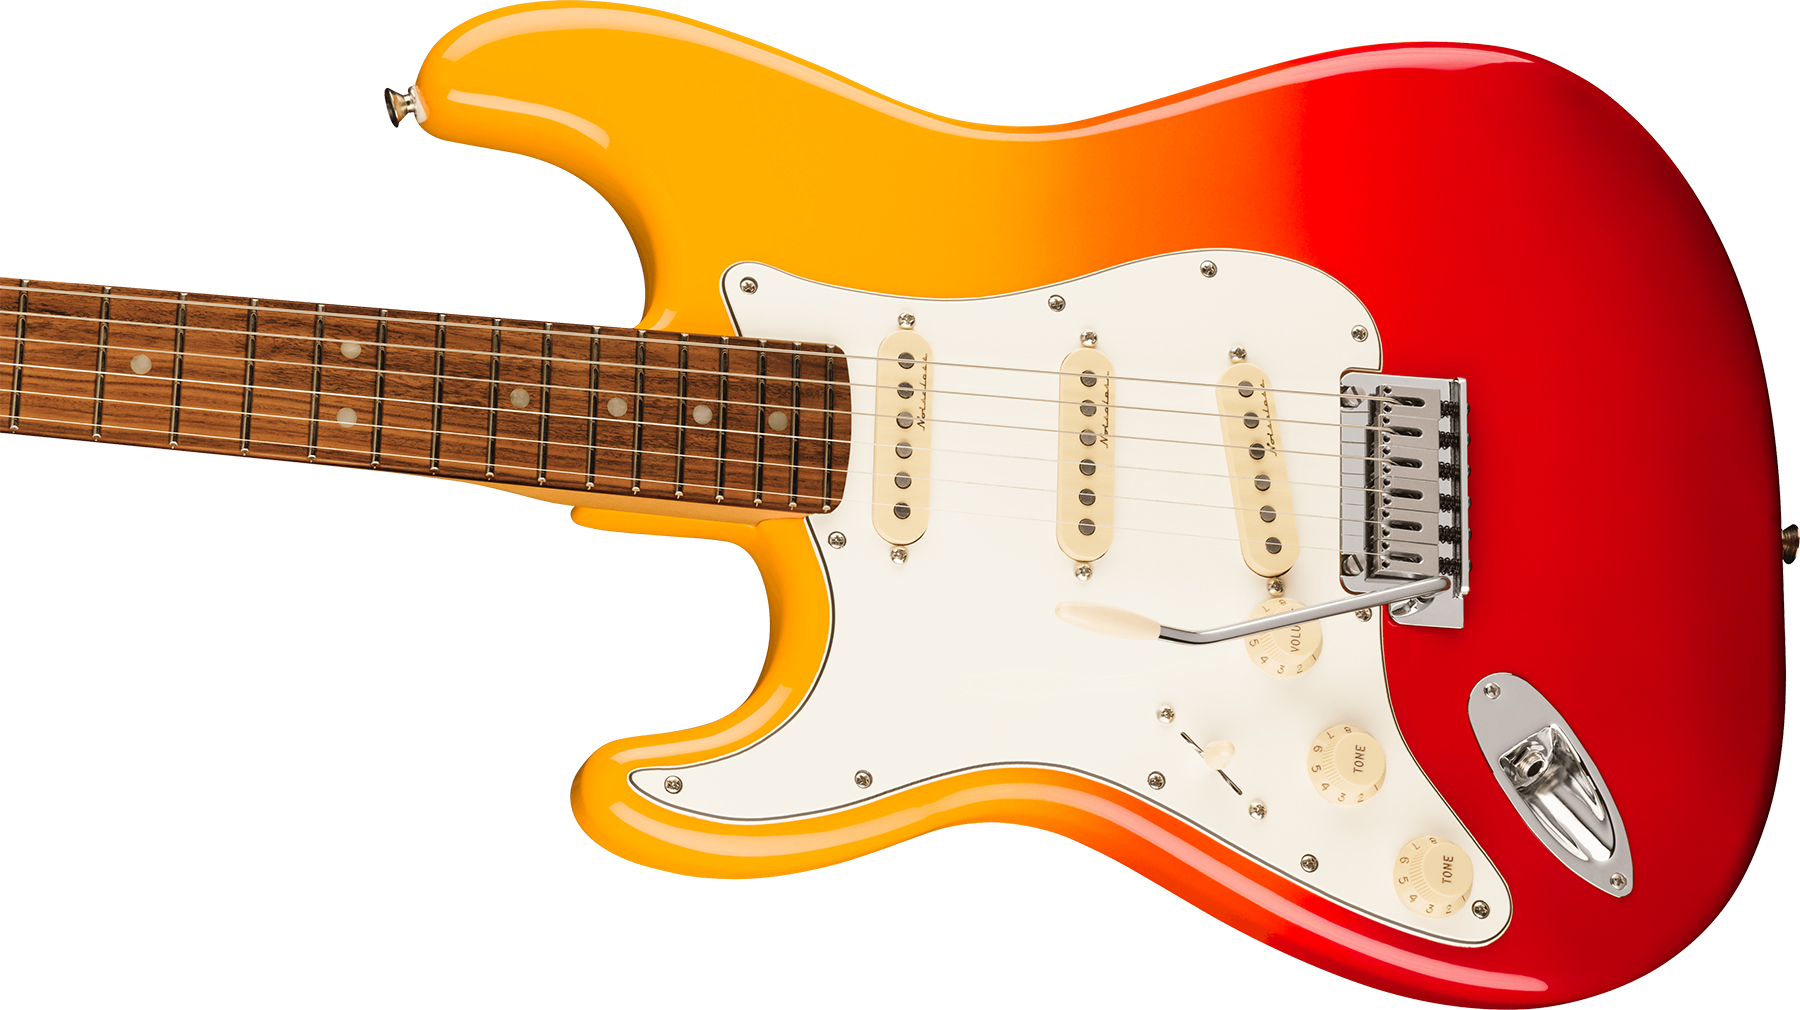 Fender Strat Player Plus Lh Gaucher Mex 3s Trem Pf - Tequila Sunrise - Left-handed electric guitar - Variation 2